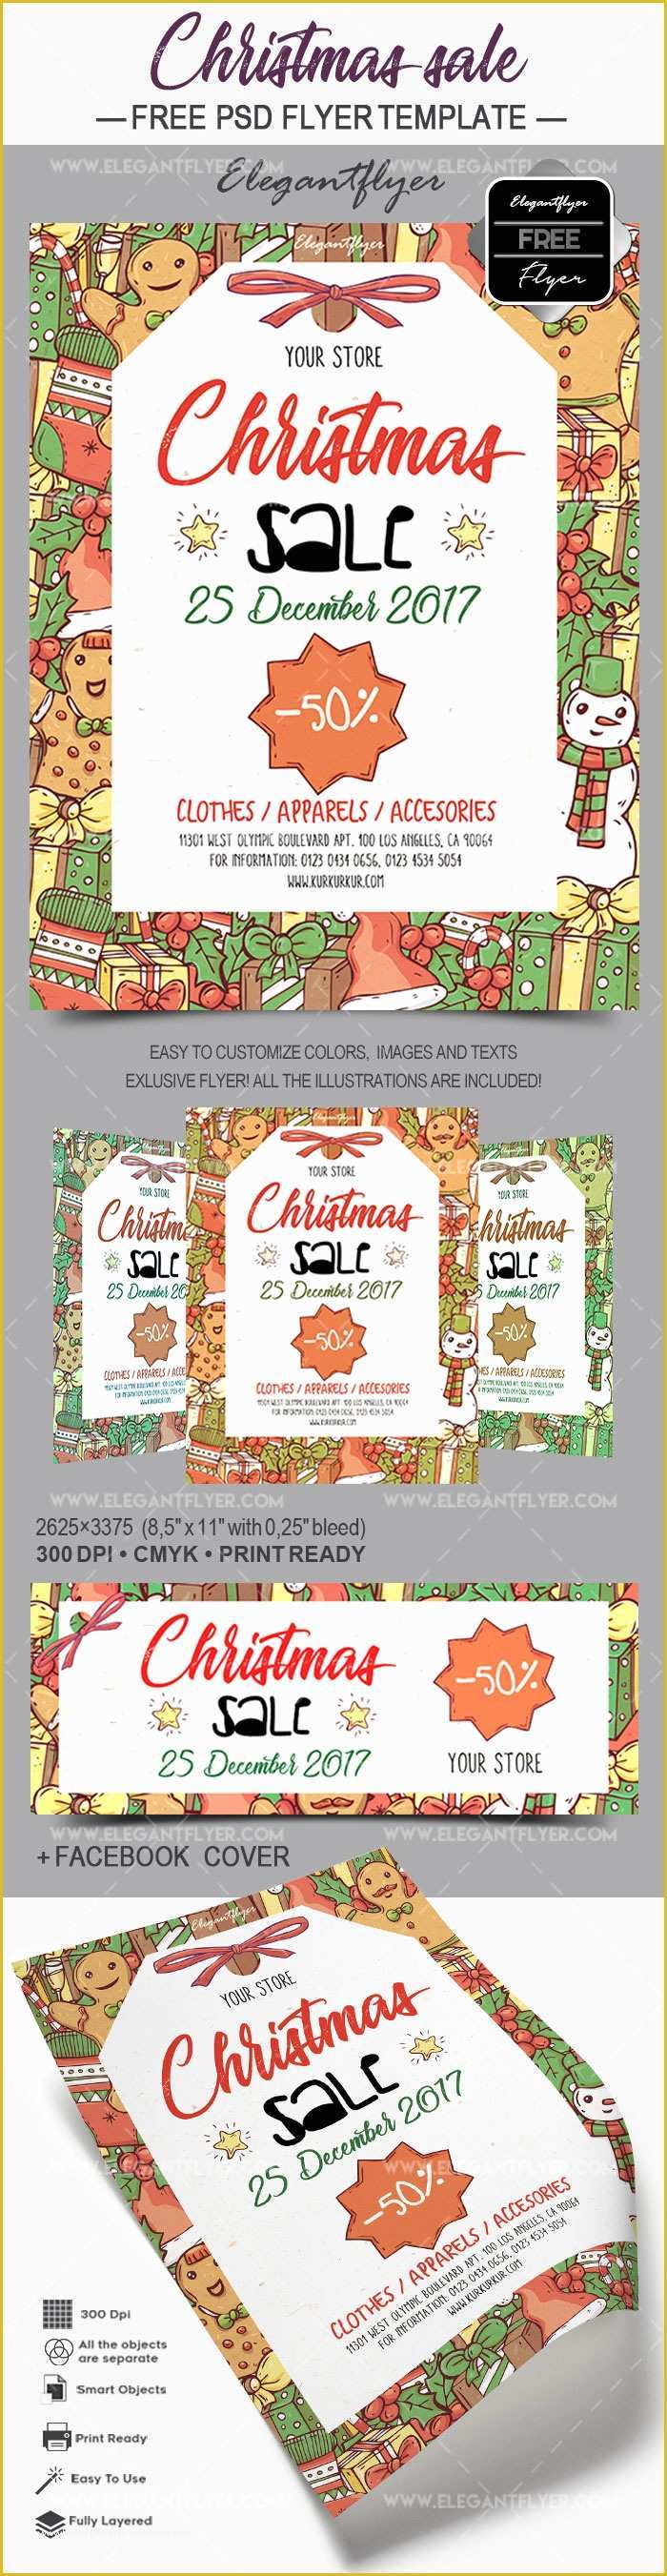 Christmas Flyers Templates Free Psd Of Christmas Sale Free Flyer – by Elegantflyer